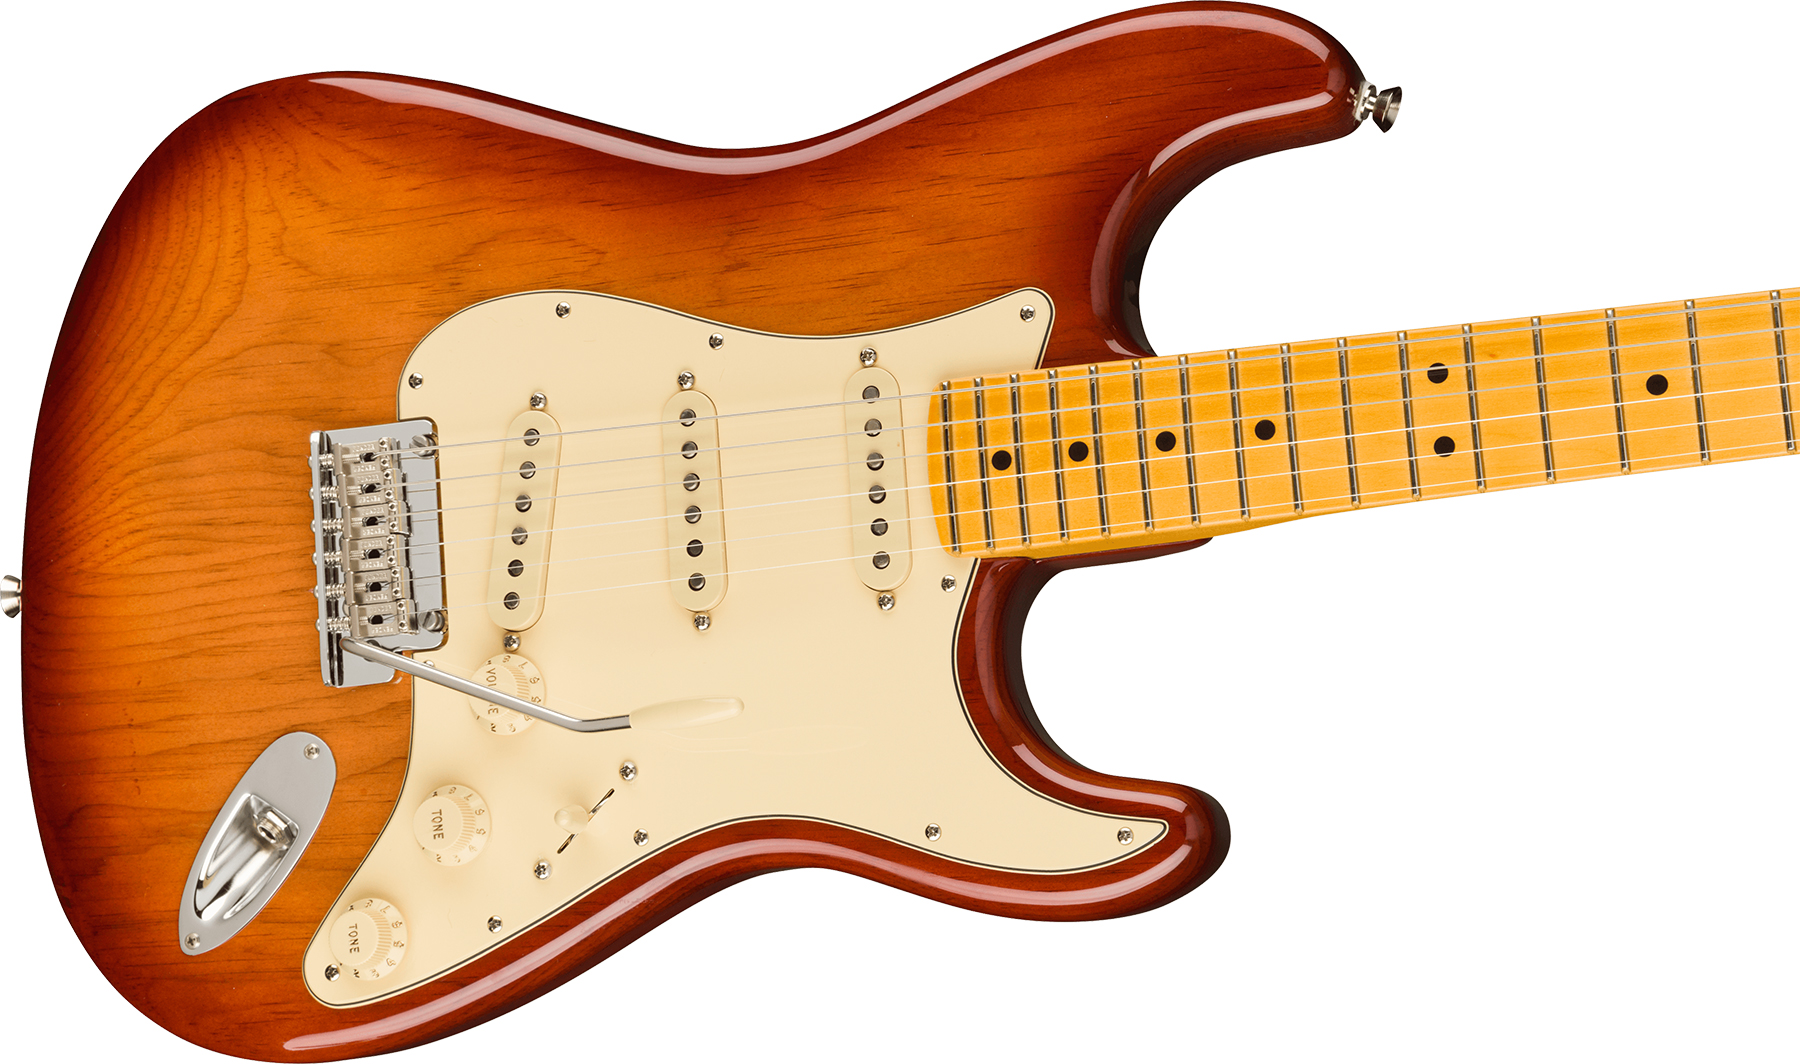 Fender Strat American Professional Ii Usa Mn - Sienna Sunburst - Str shape electric guitar - Variation 2